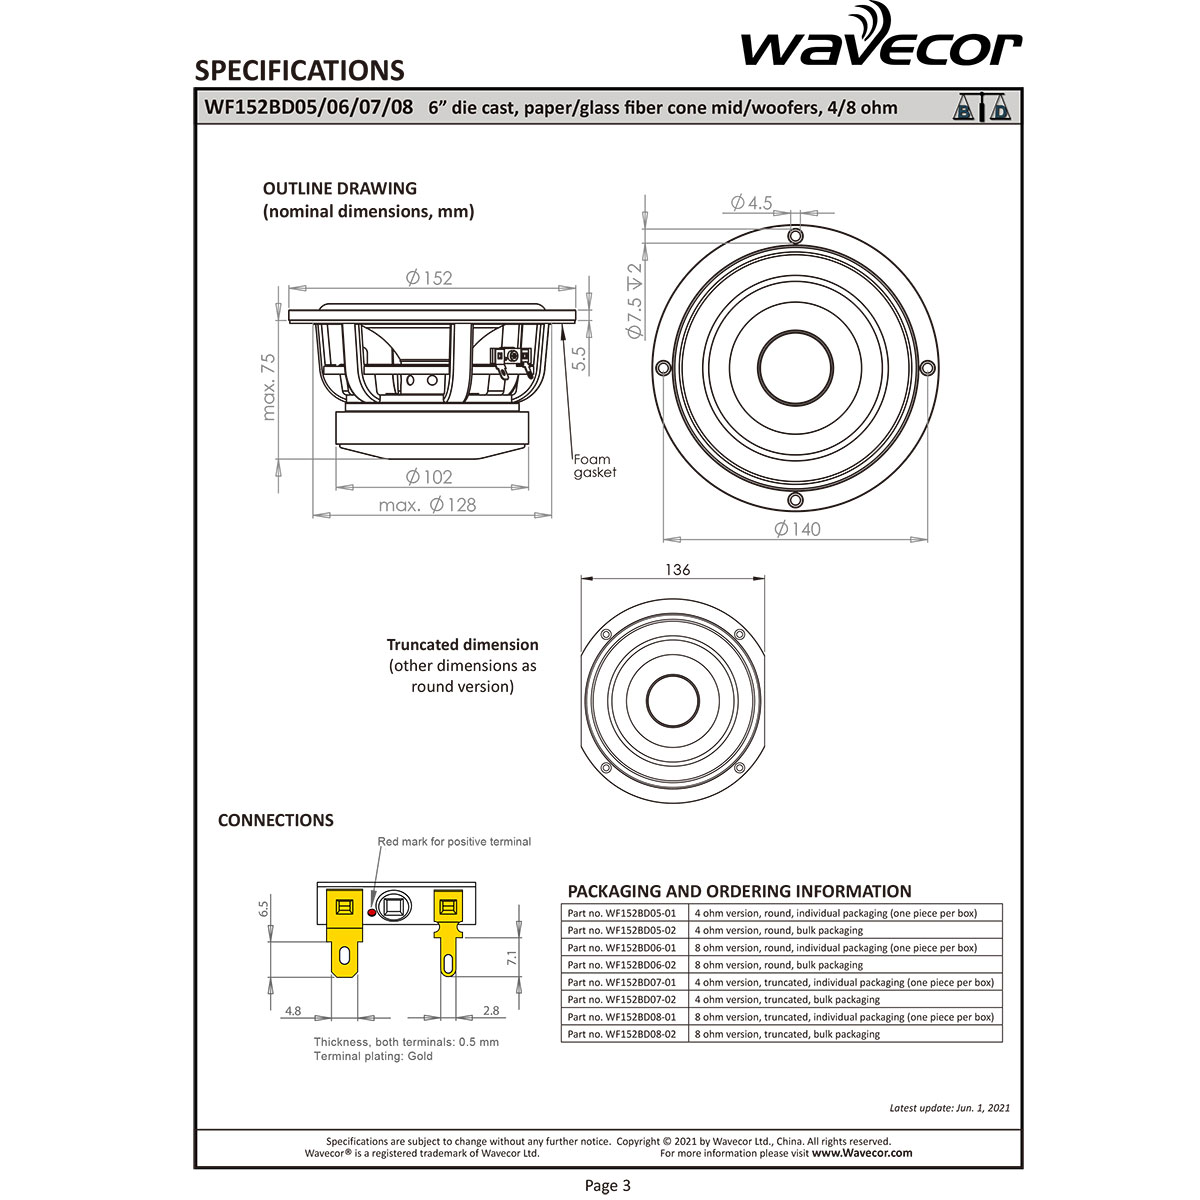 Wavecor WF152BD07画像